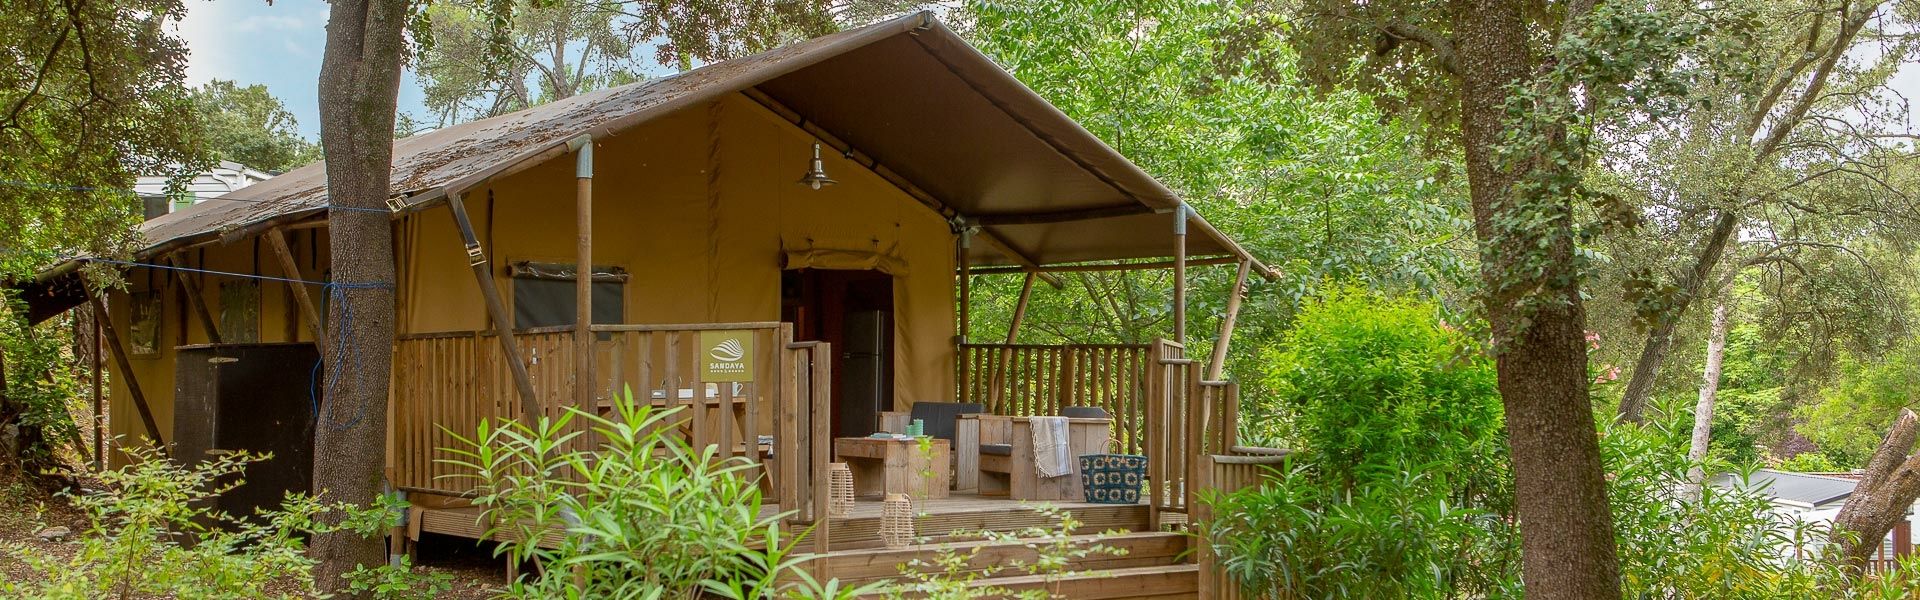 Camping Tentes lodges